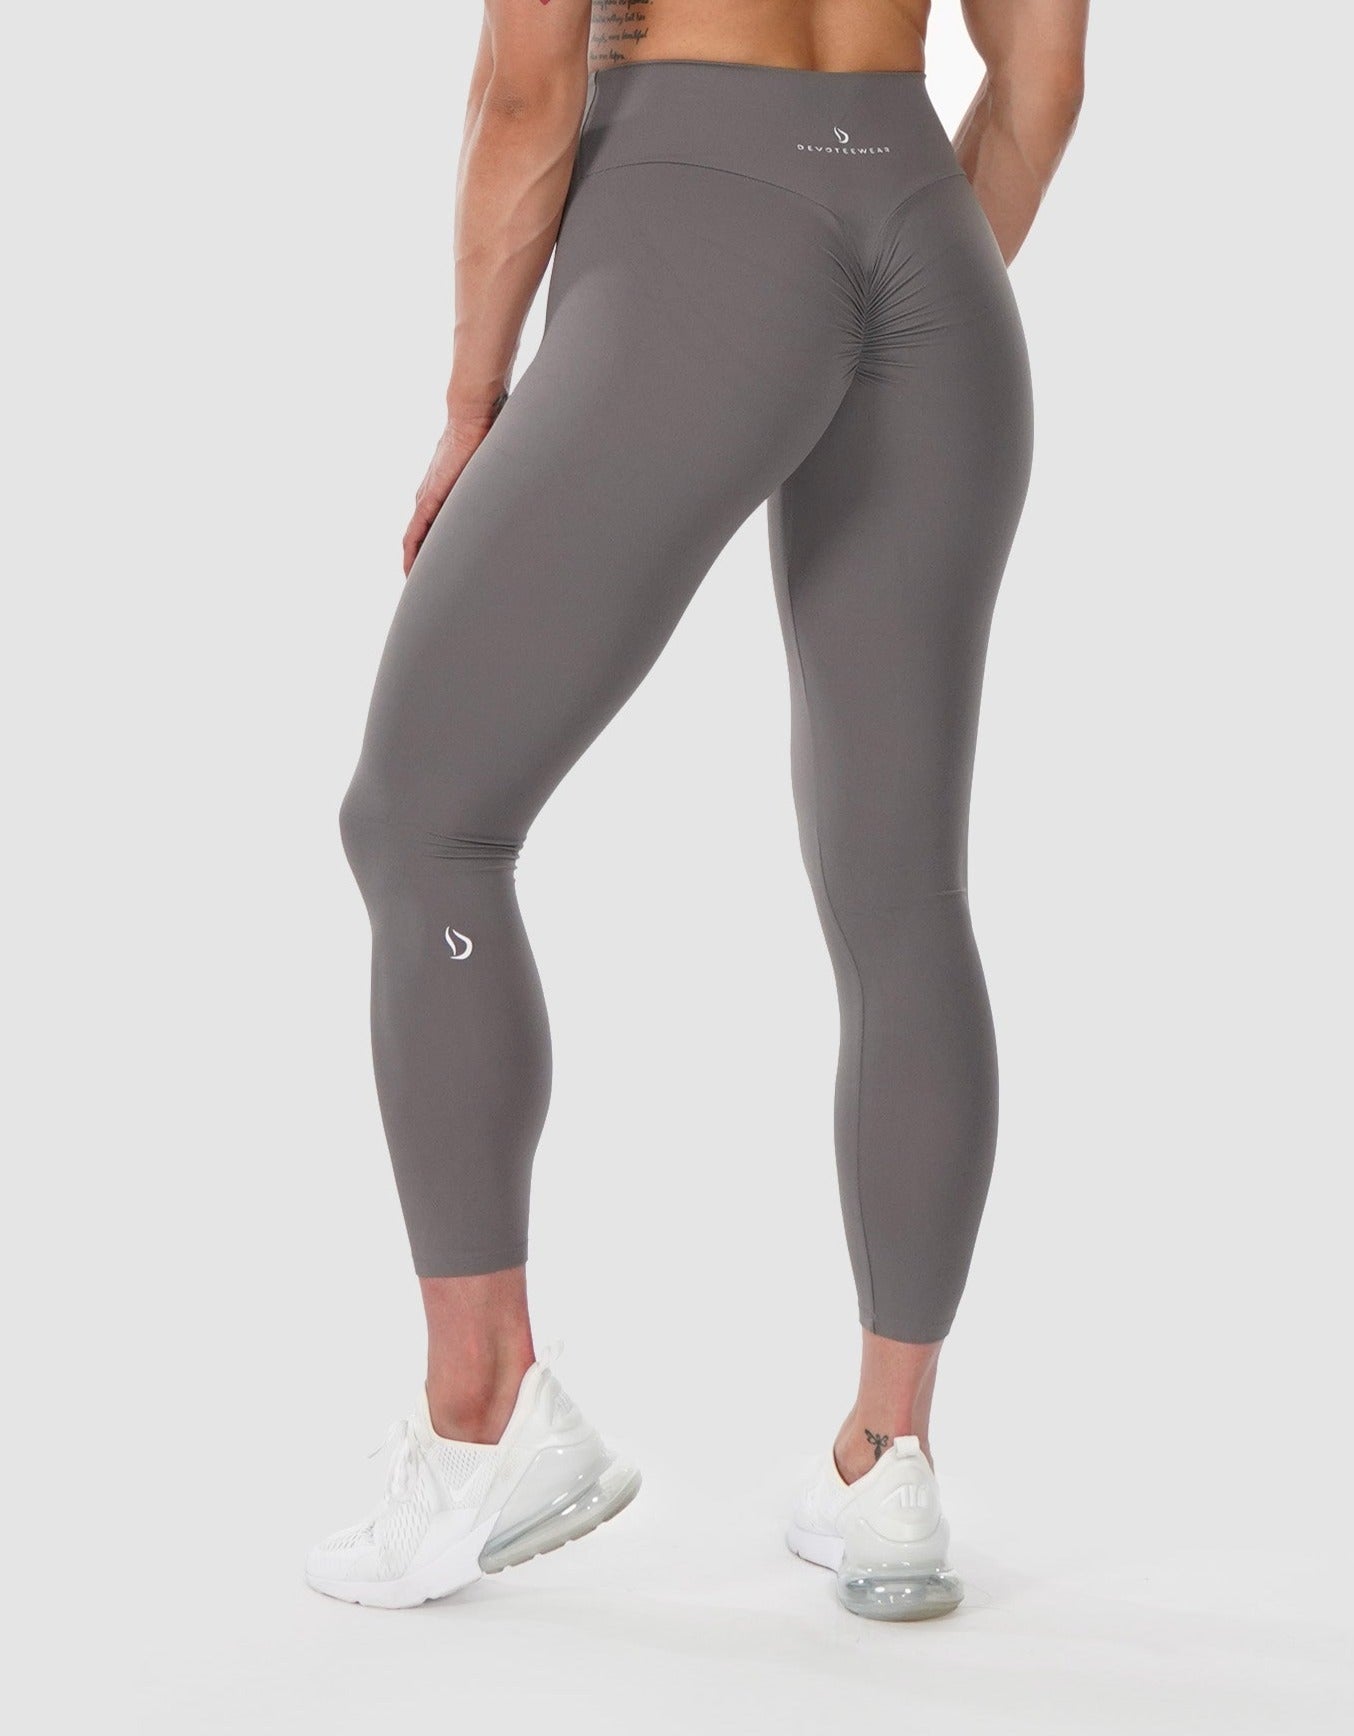 Nigeria Soccer Women's Yoga Pants Capri Leggings High Waist Tights Skinny  Pants Black at  Women's Clothing store